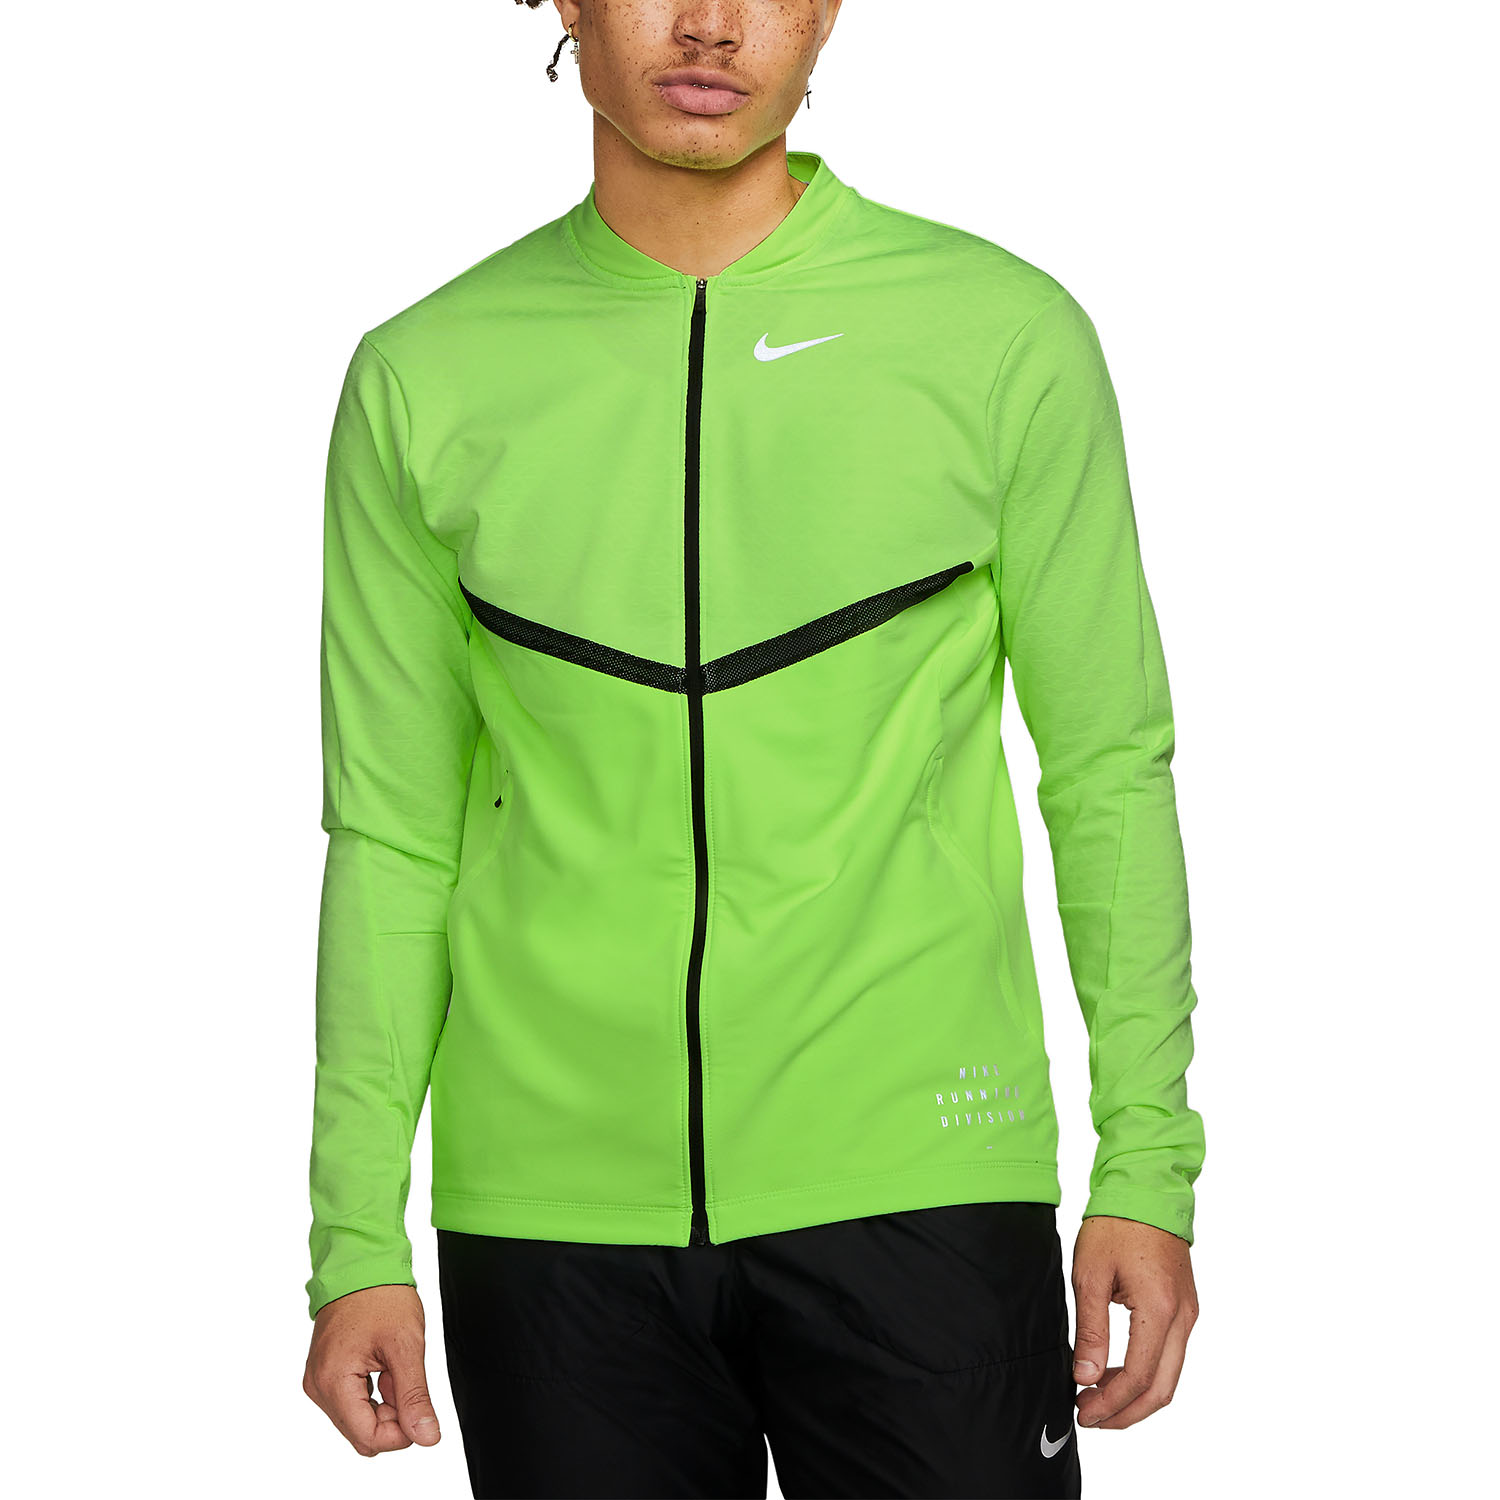 Nike Dri-FIT Run Division Men's Running Shirt - Ghost Green